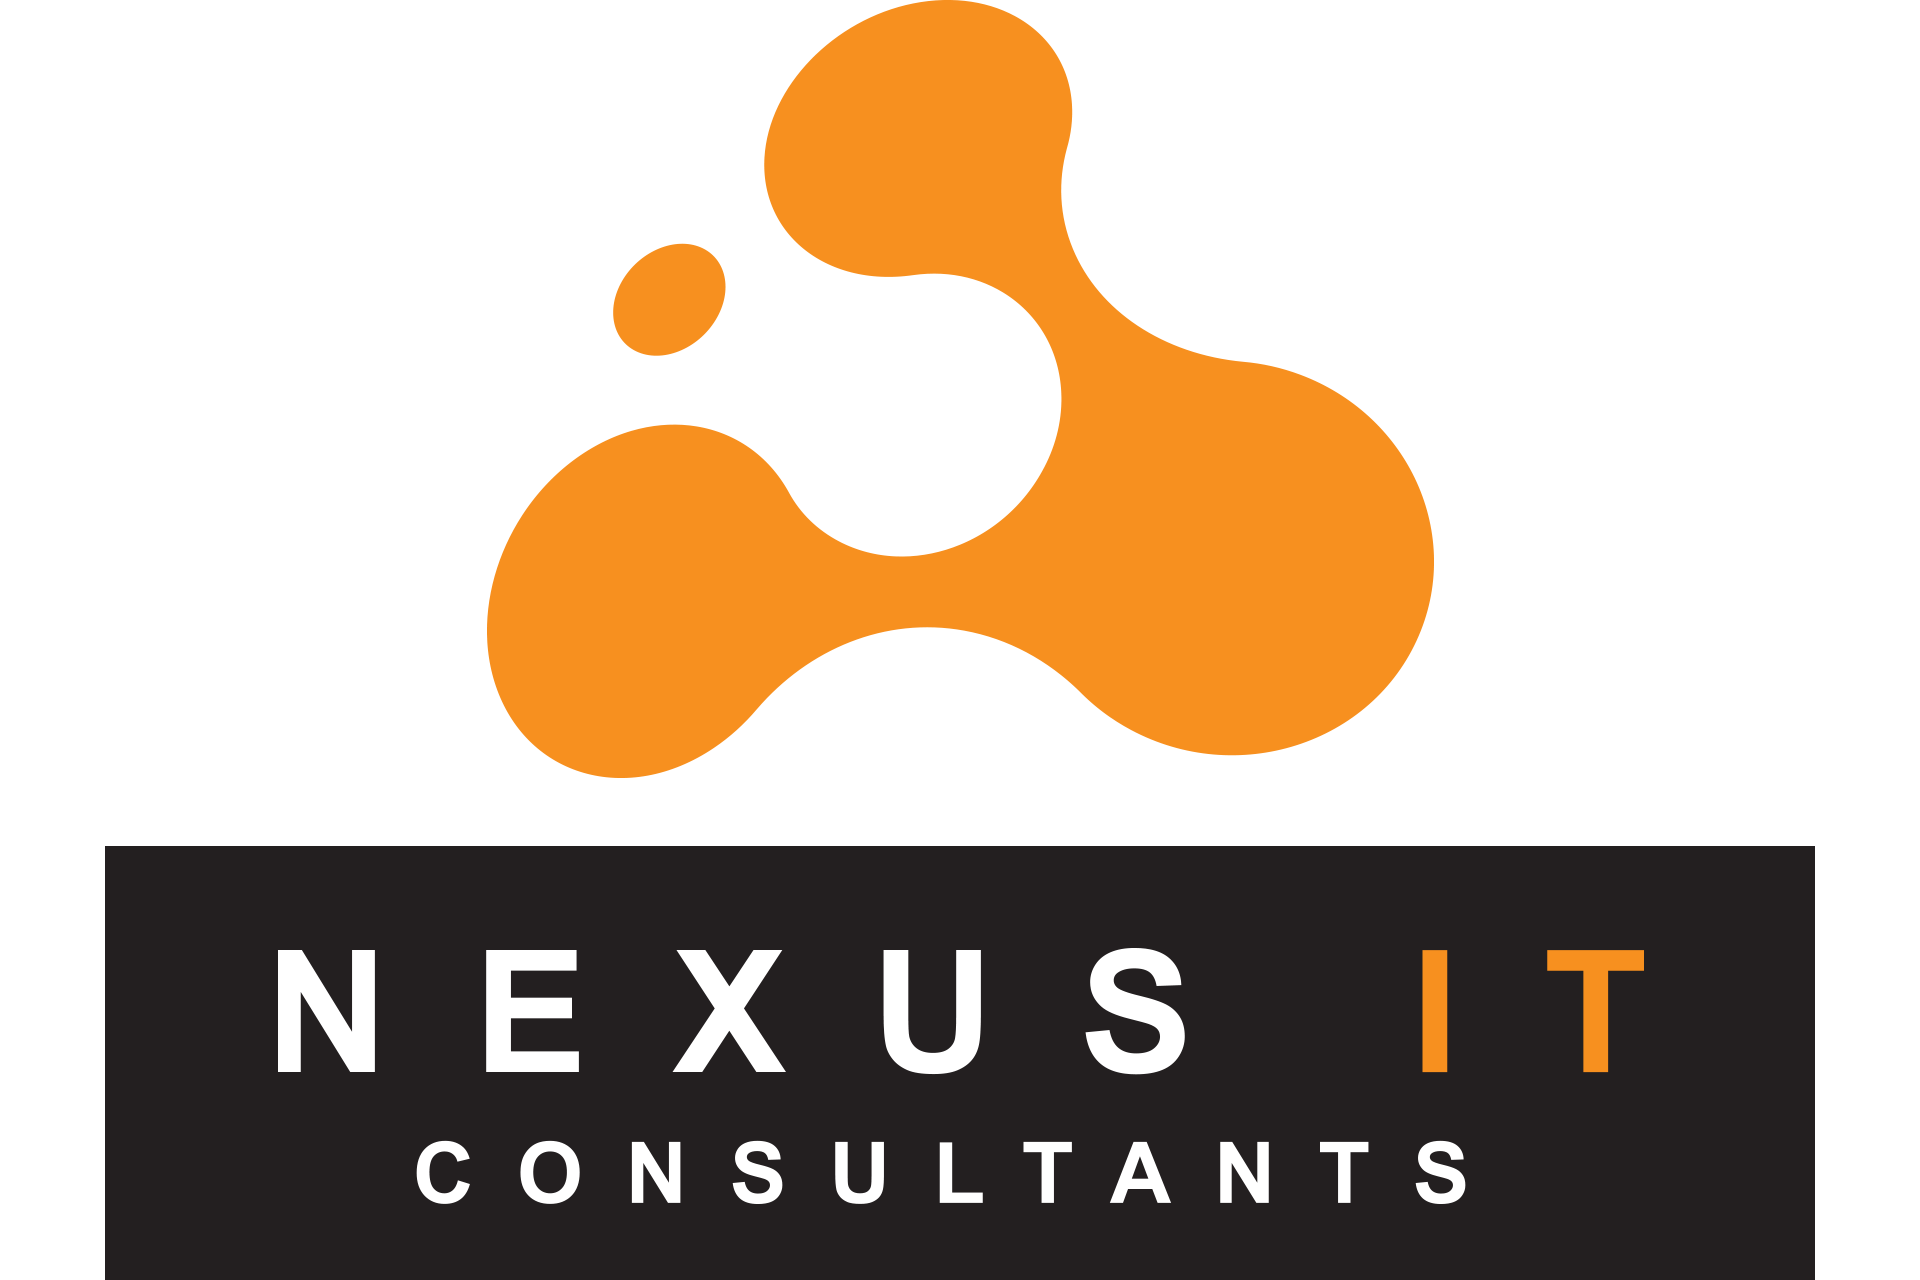 Salt Lake City-Based IT Services Provider Intelitechs Merges With Nexus IT